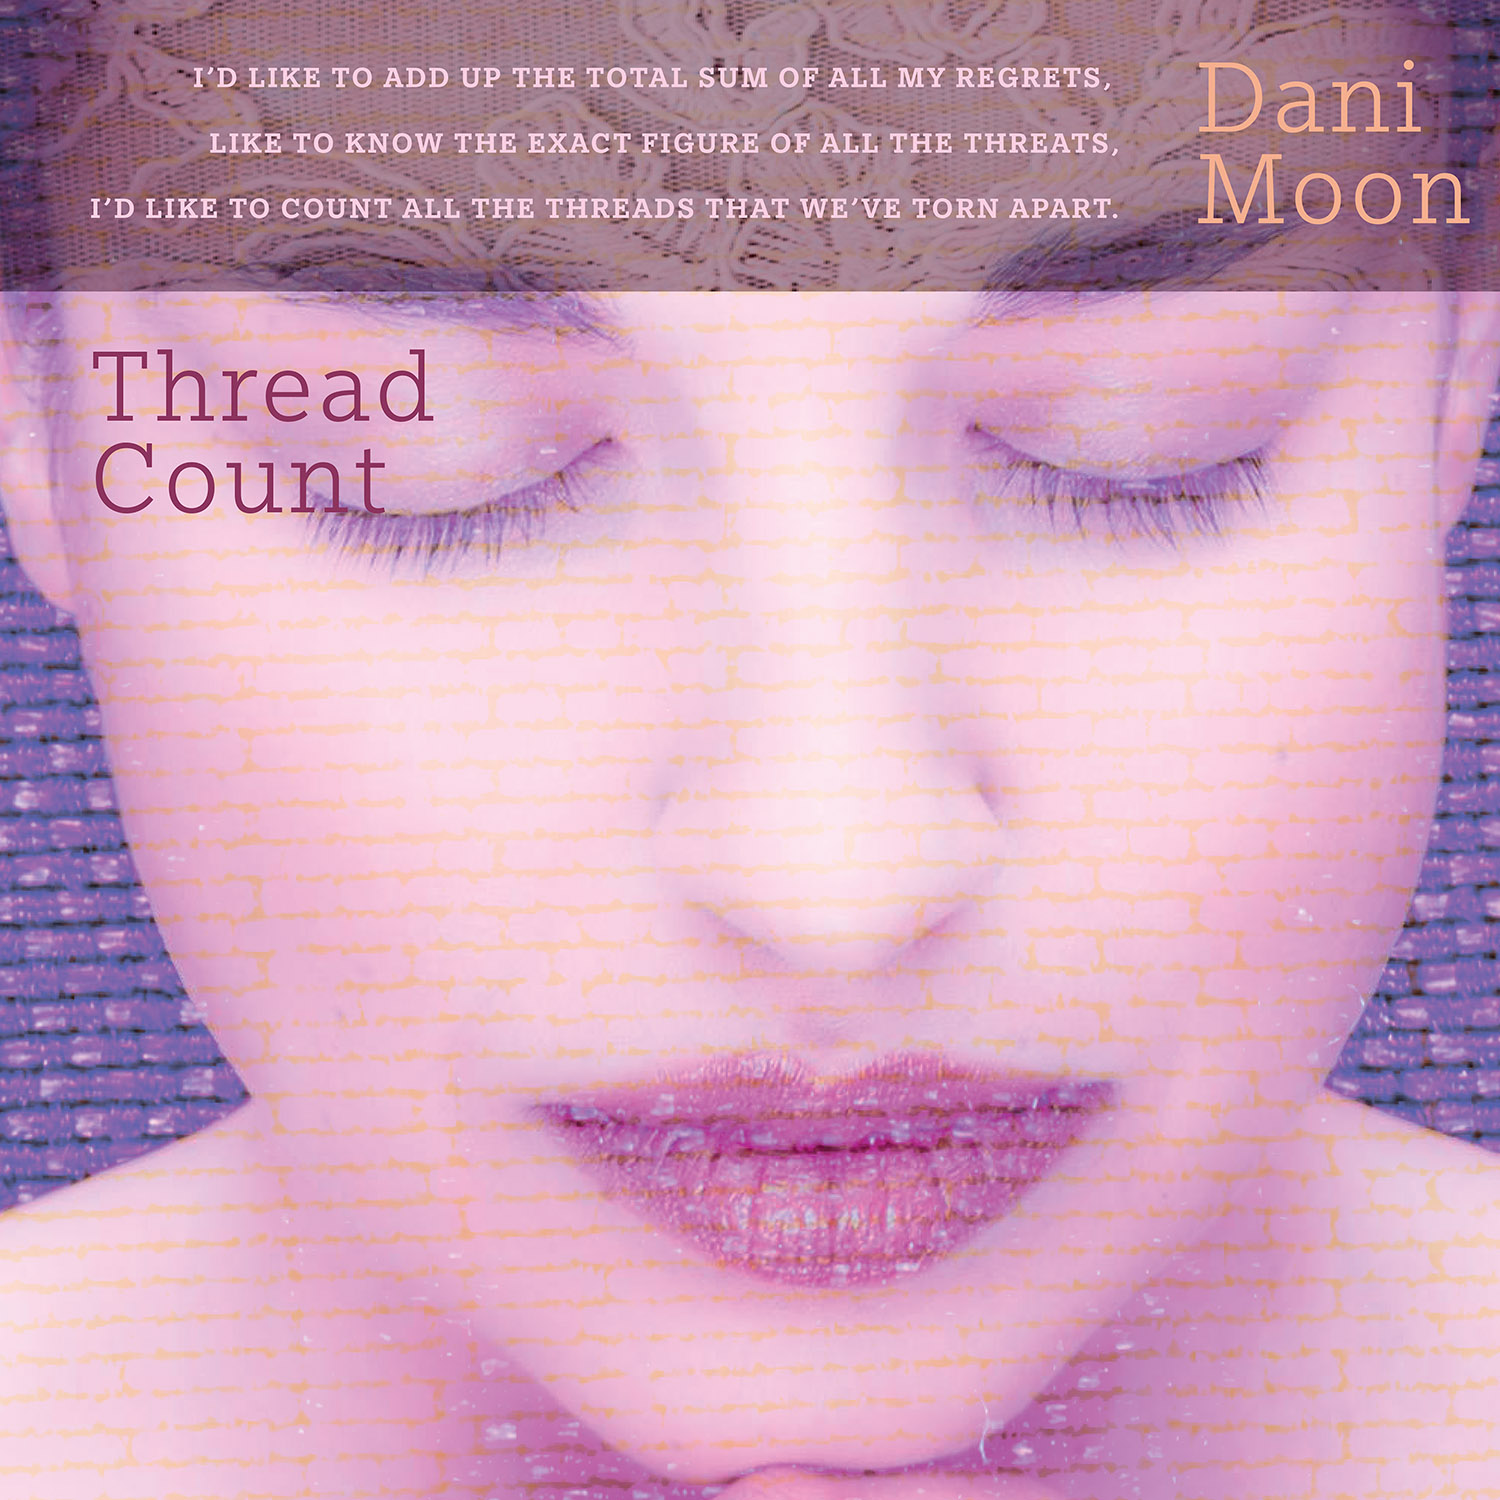 Thread Count by Dani Moon